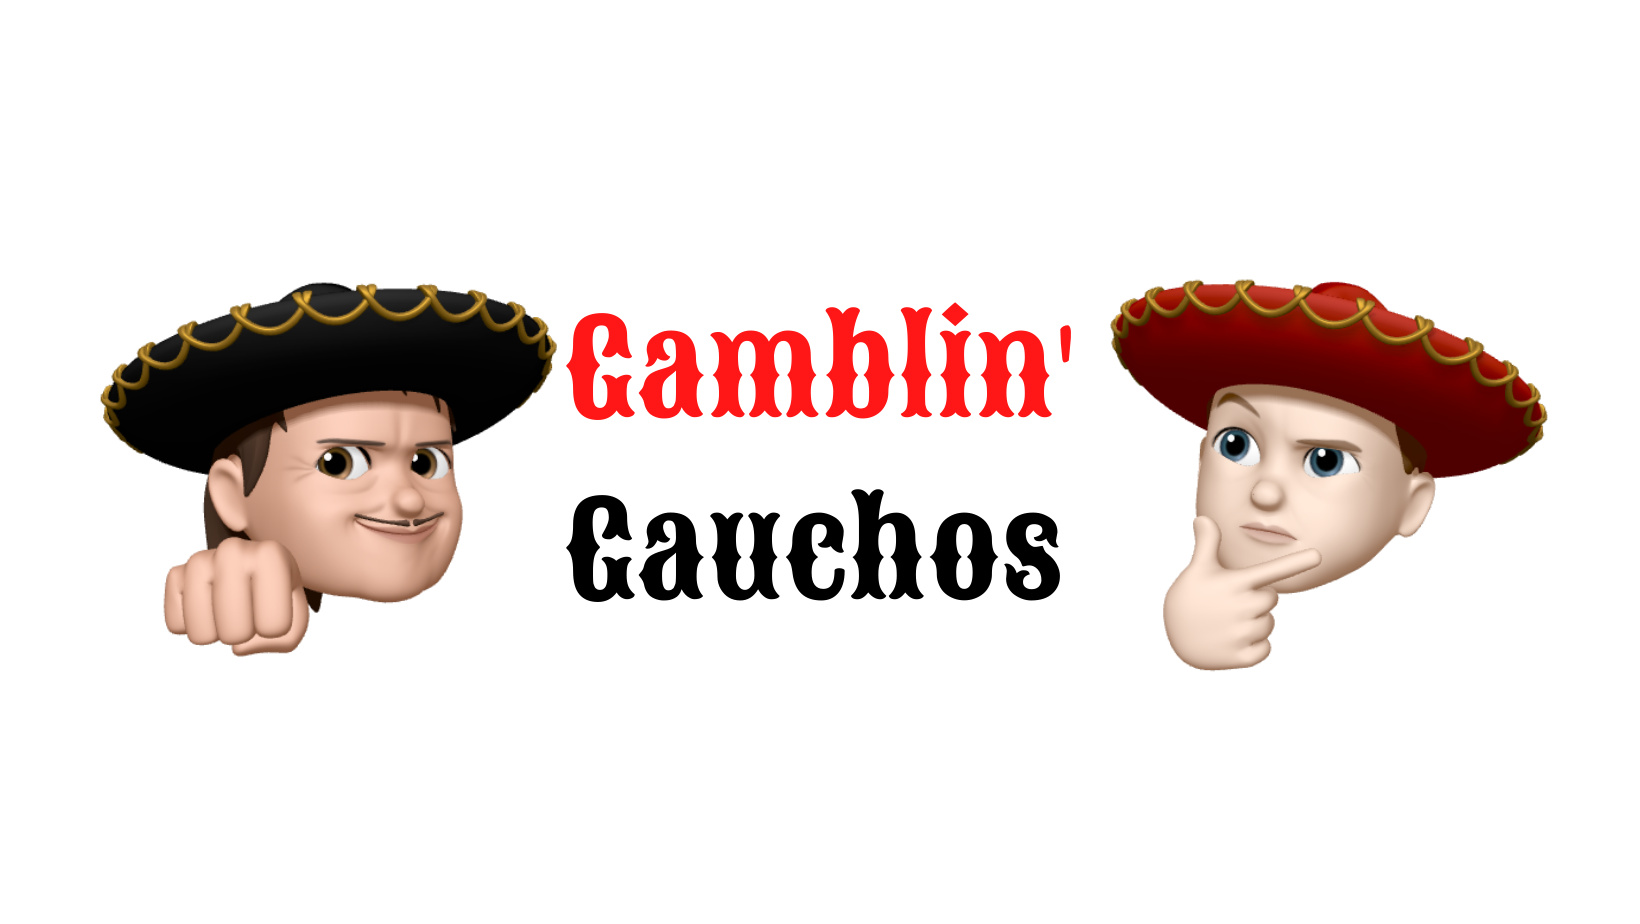 Gamblin’ Gauchos S1 E6: Texas Tech-SFA Preview, Big 12 Expansion, Week 2 Picks